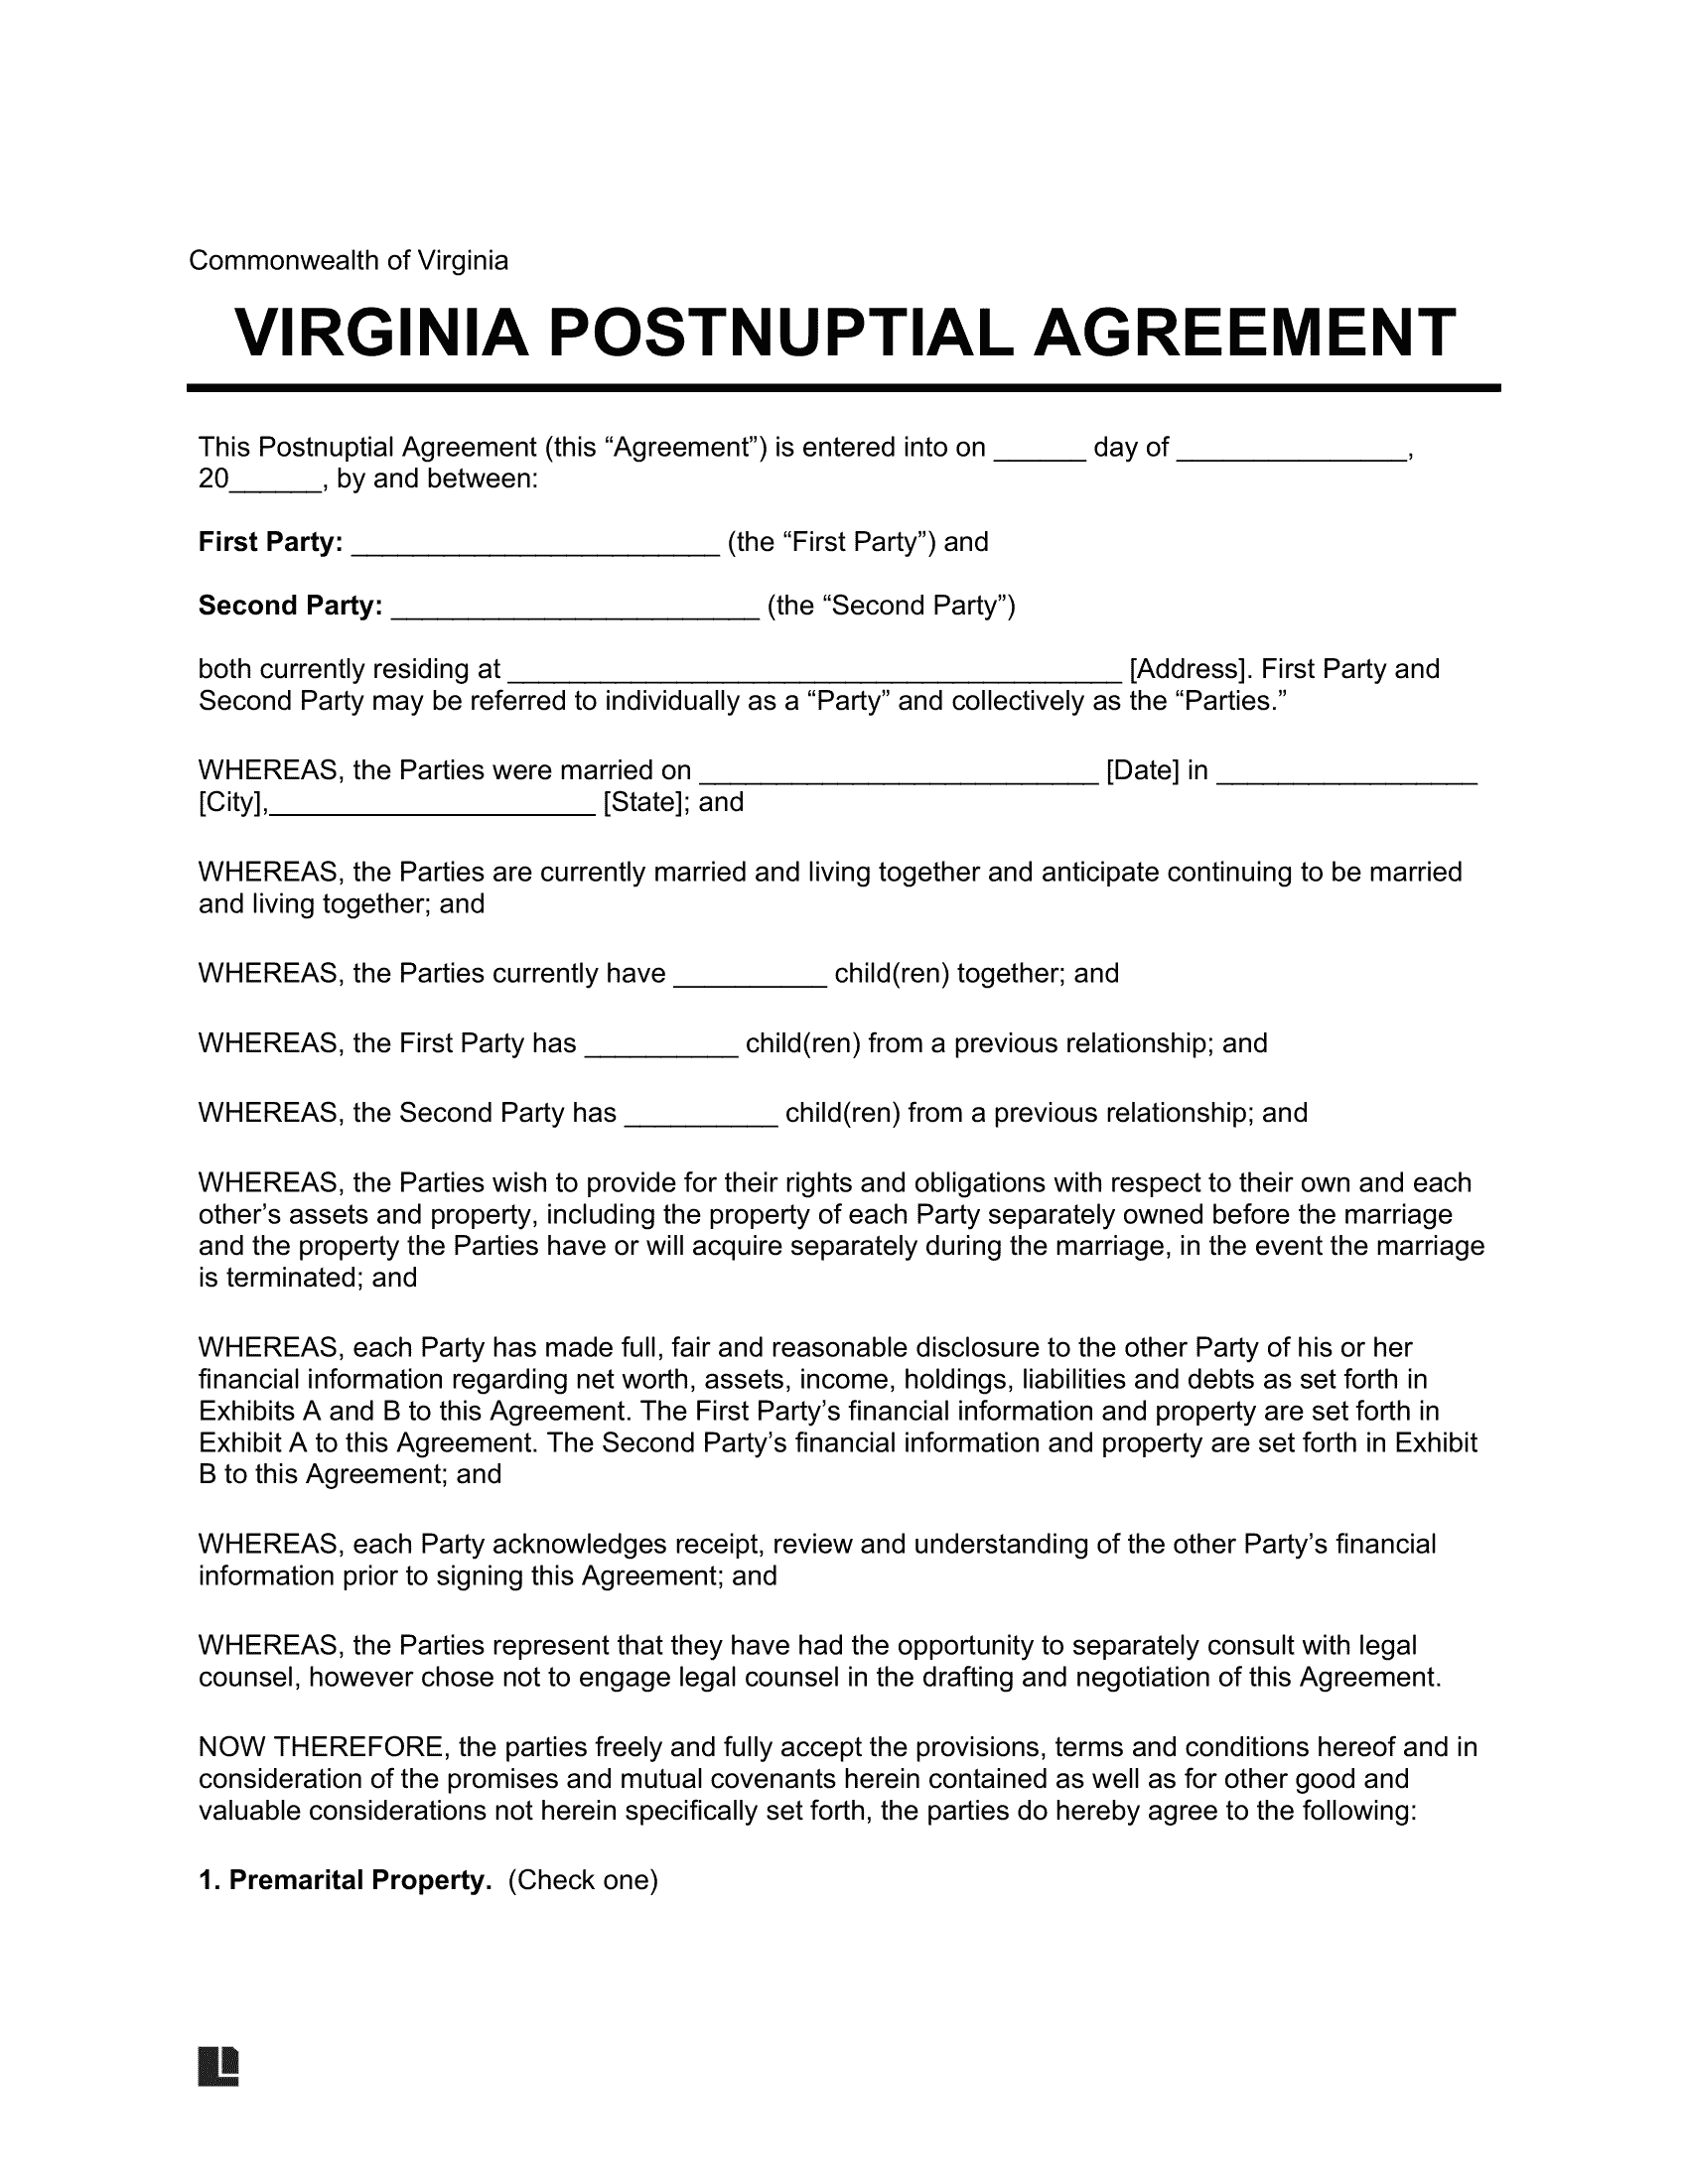 Virginia Postnuptial Agreement Template